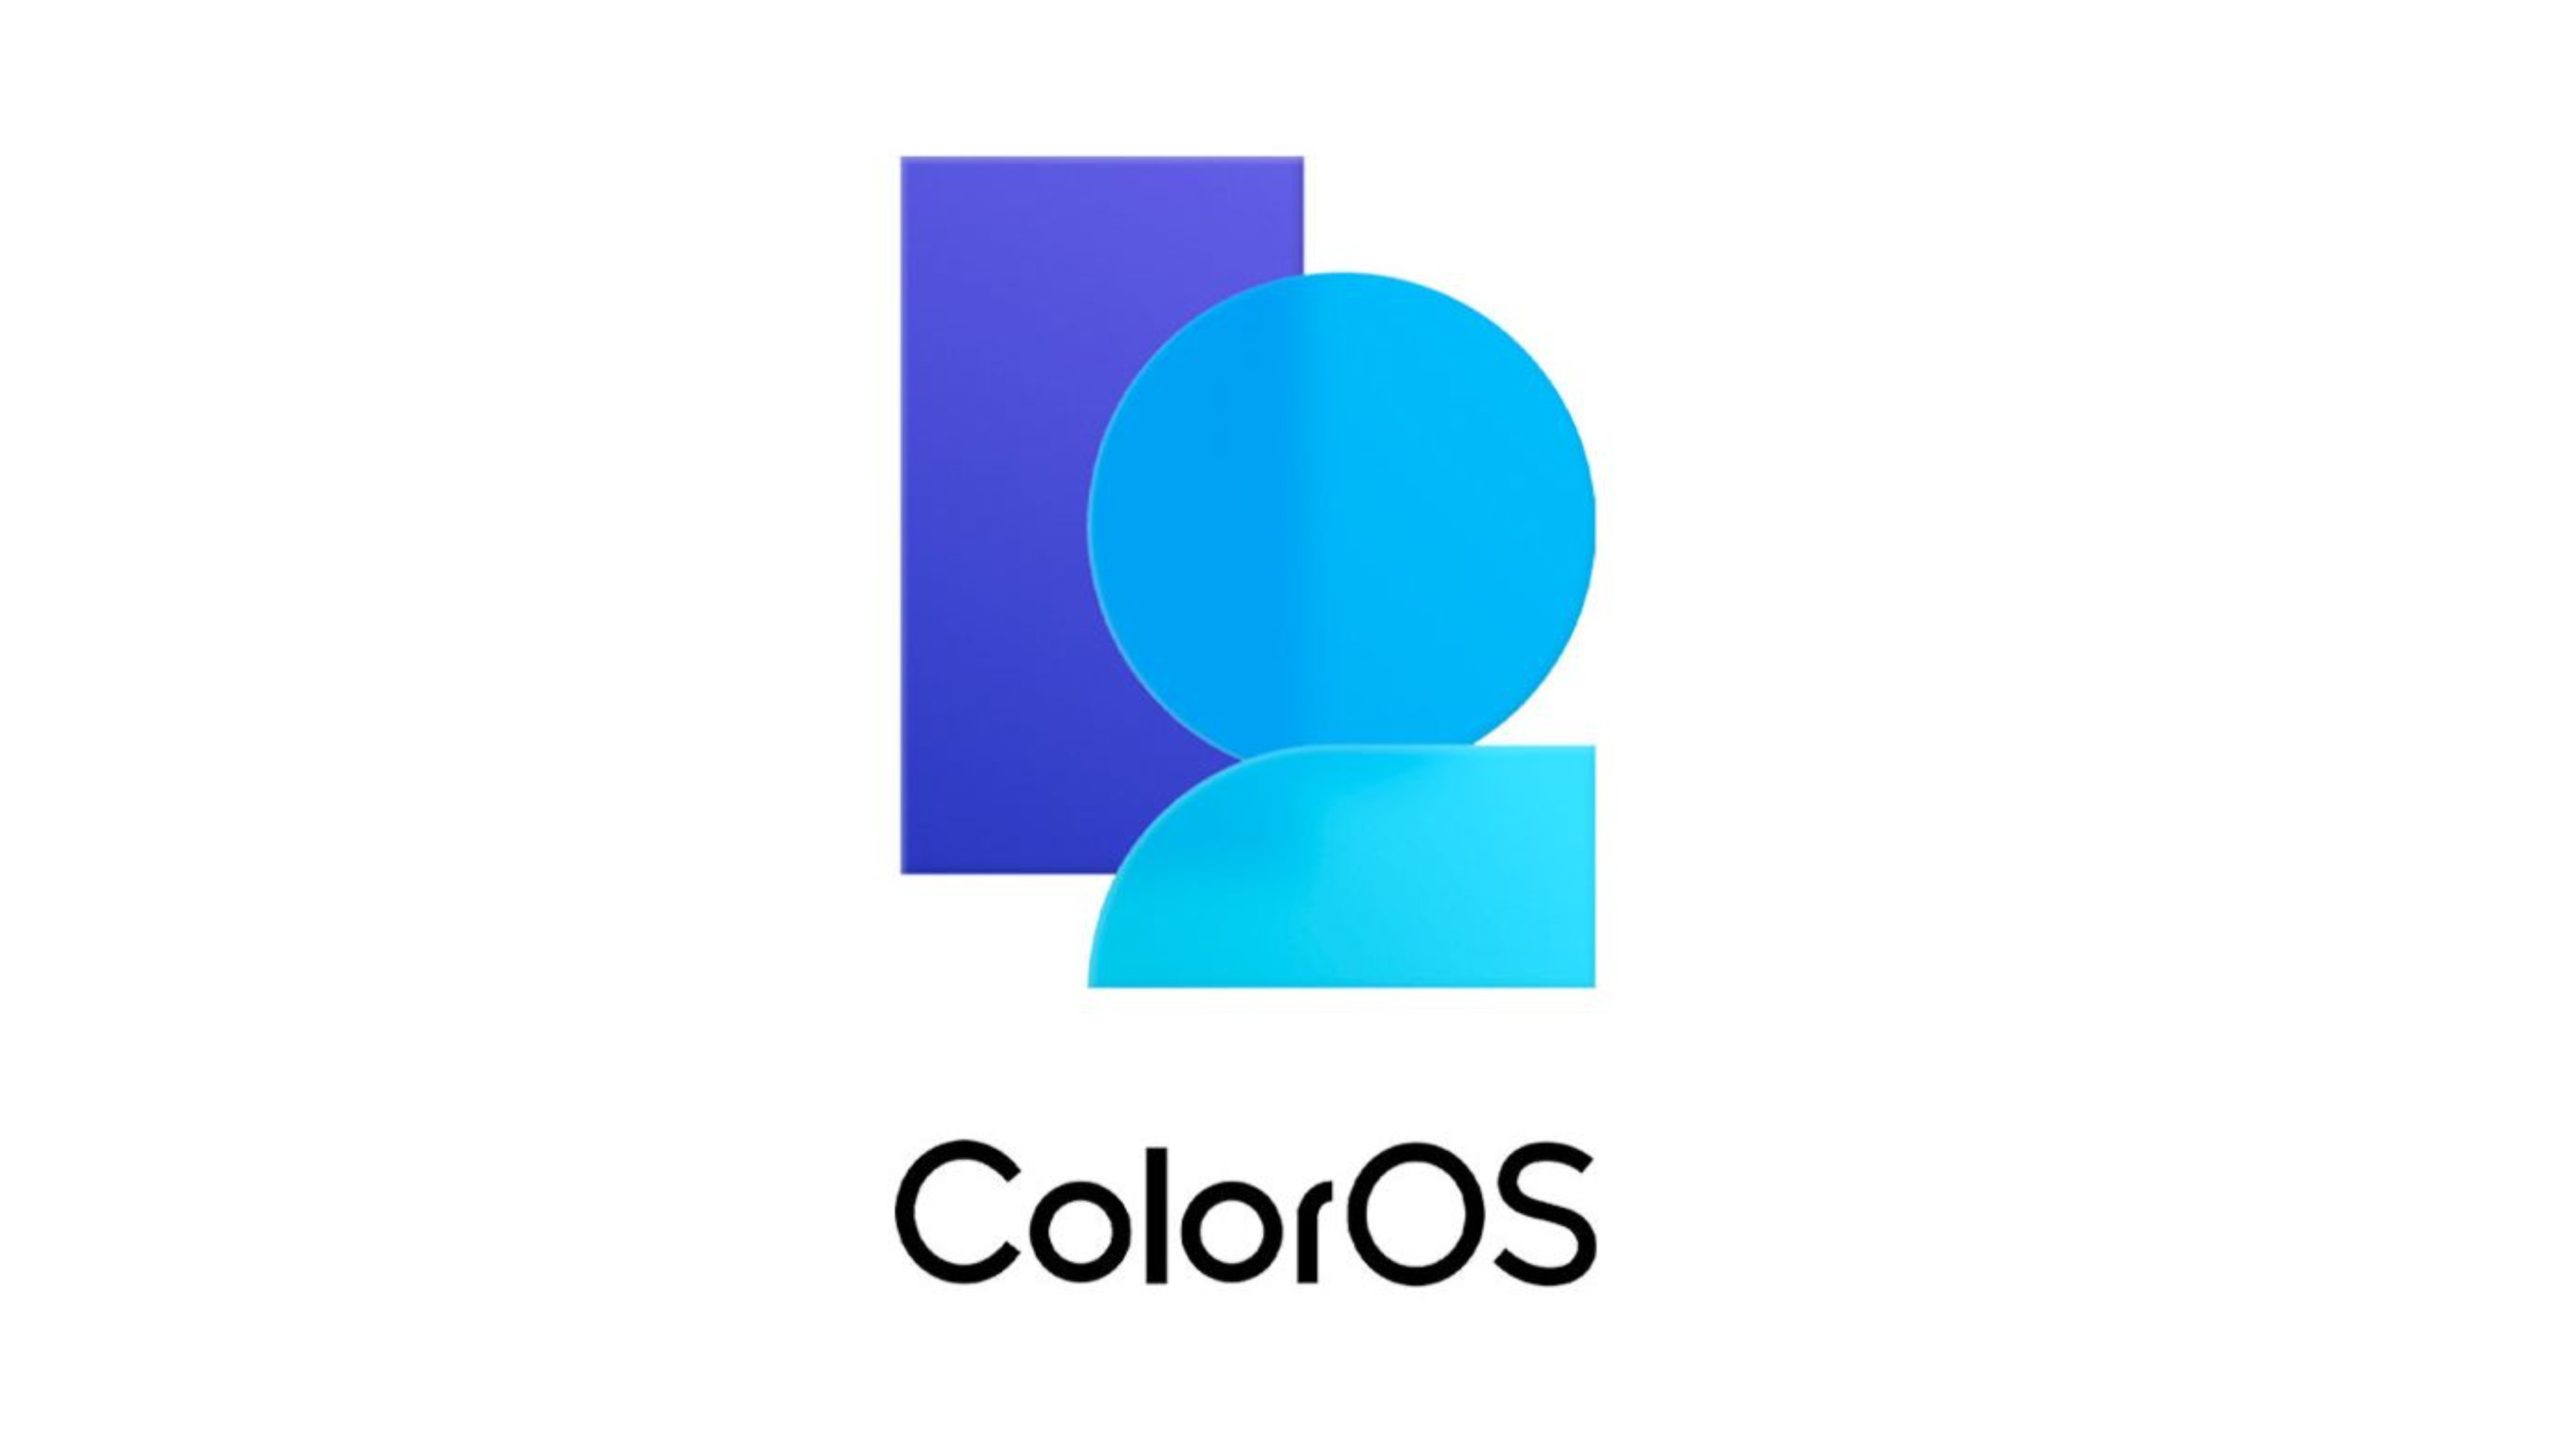 ColorOS 12 logo featured image